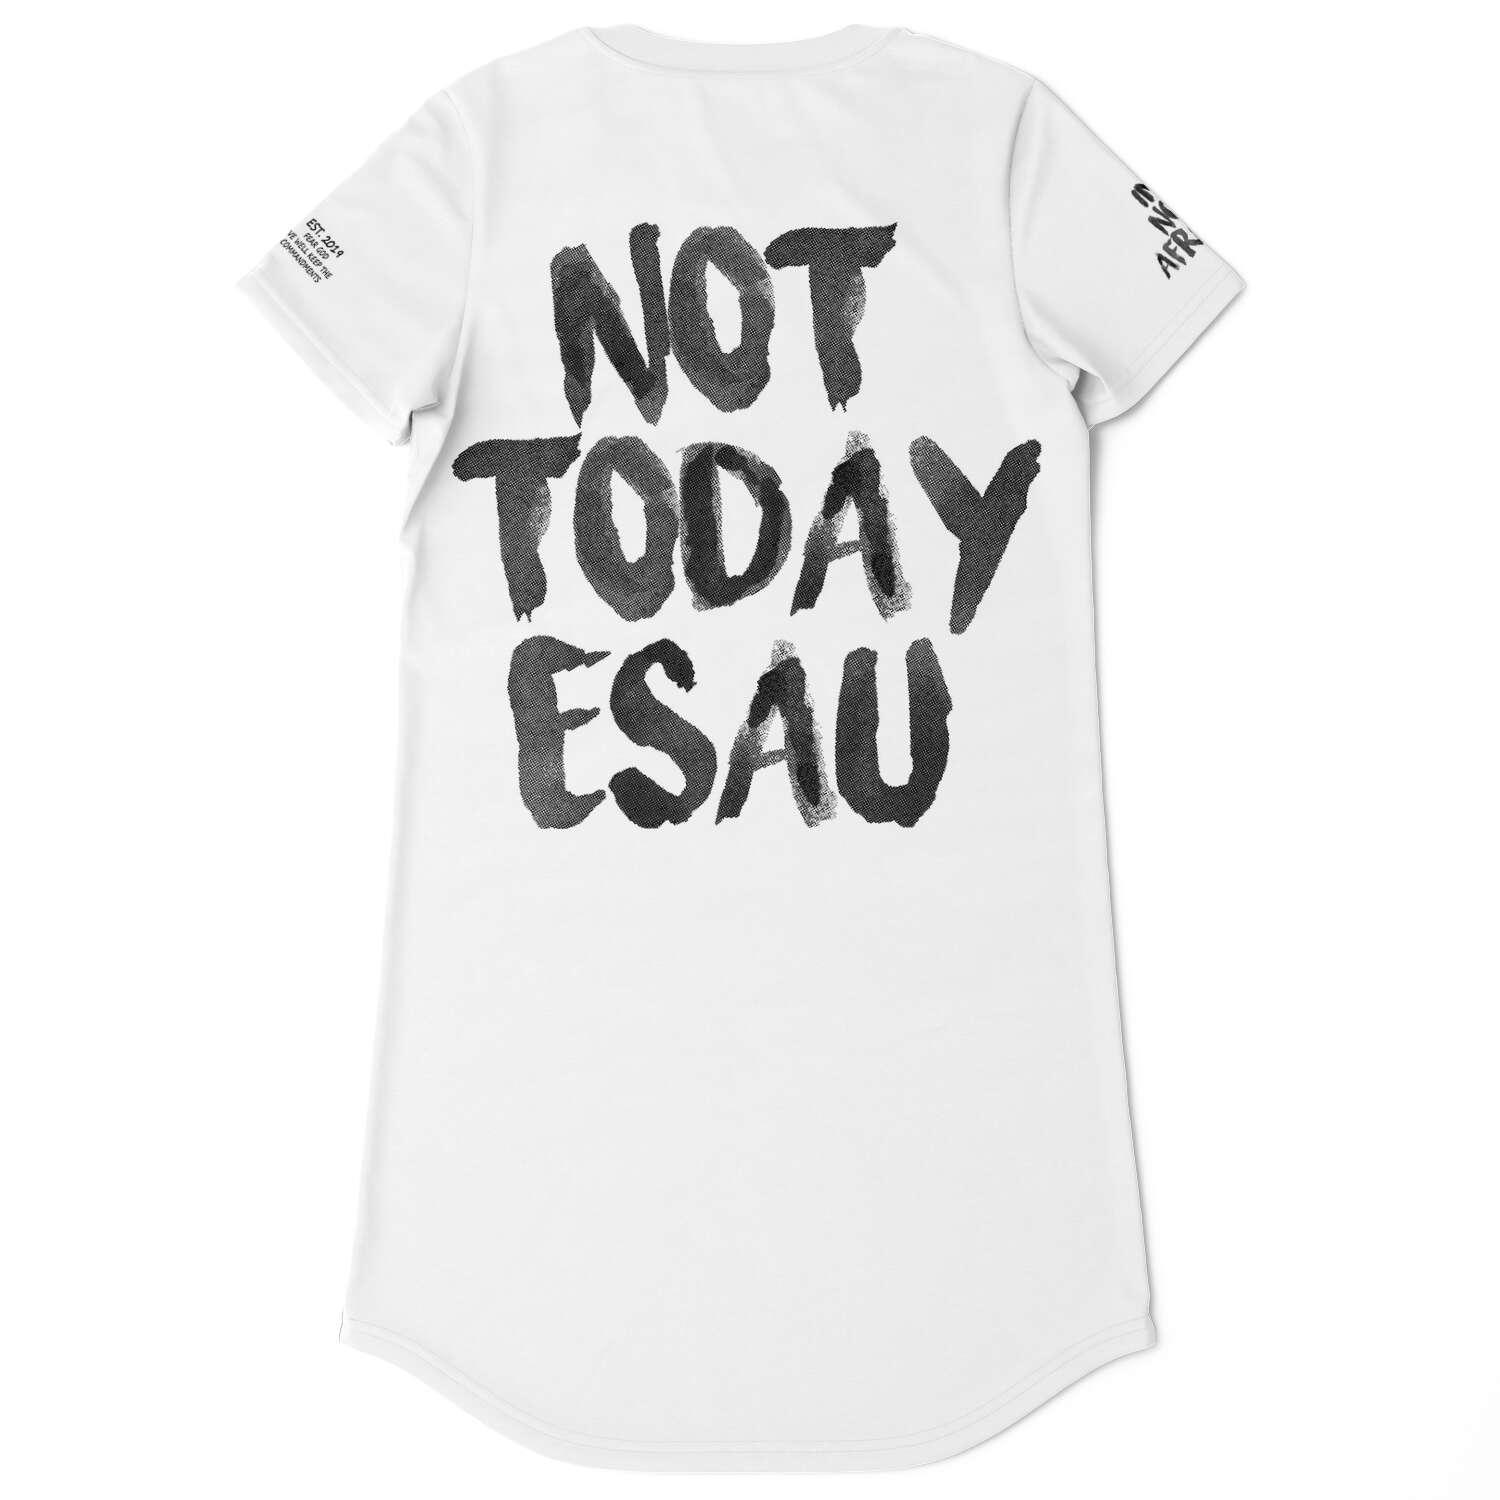 Hebrew Israelite Women's "Not Today Esau" Premium Jersey T-shirt Dress